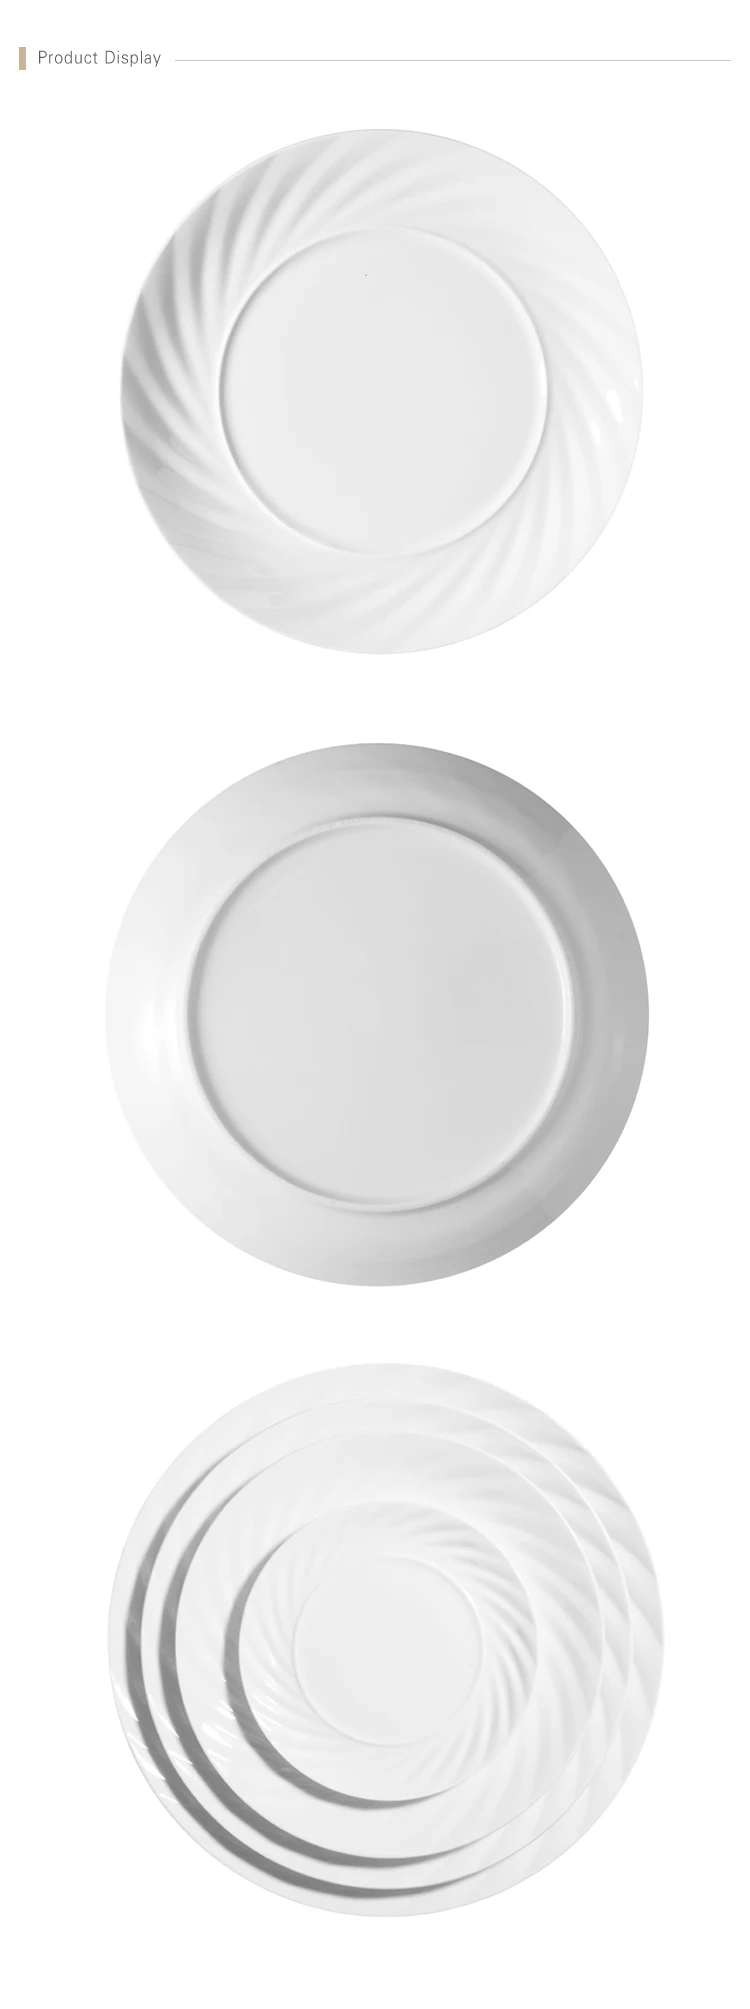 Ceramic Plate Handmade 10.5 Inch Hotel Ware Plates Porcelain Plates Sets Dinnerware